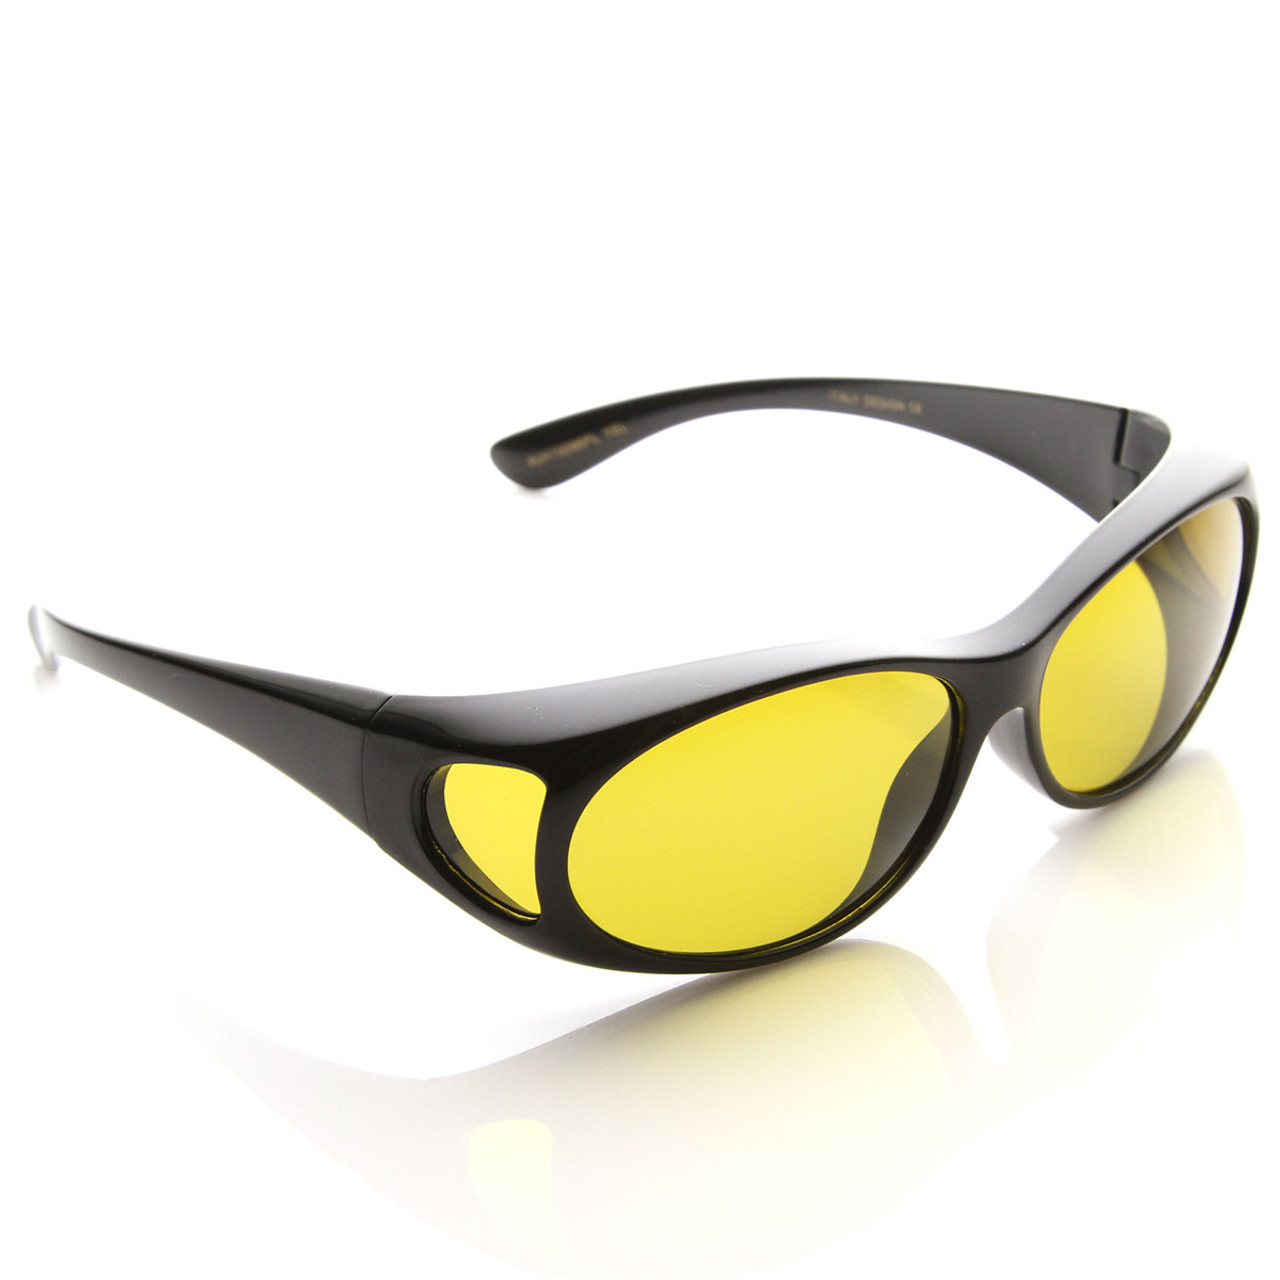 Polarized Overlap Cover Fit On Full Protection Anti-Glare Sunglasses